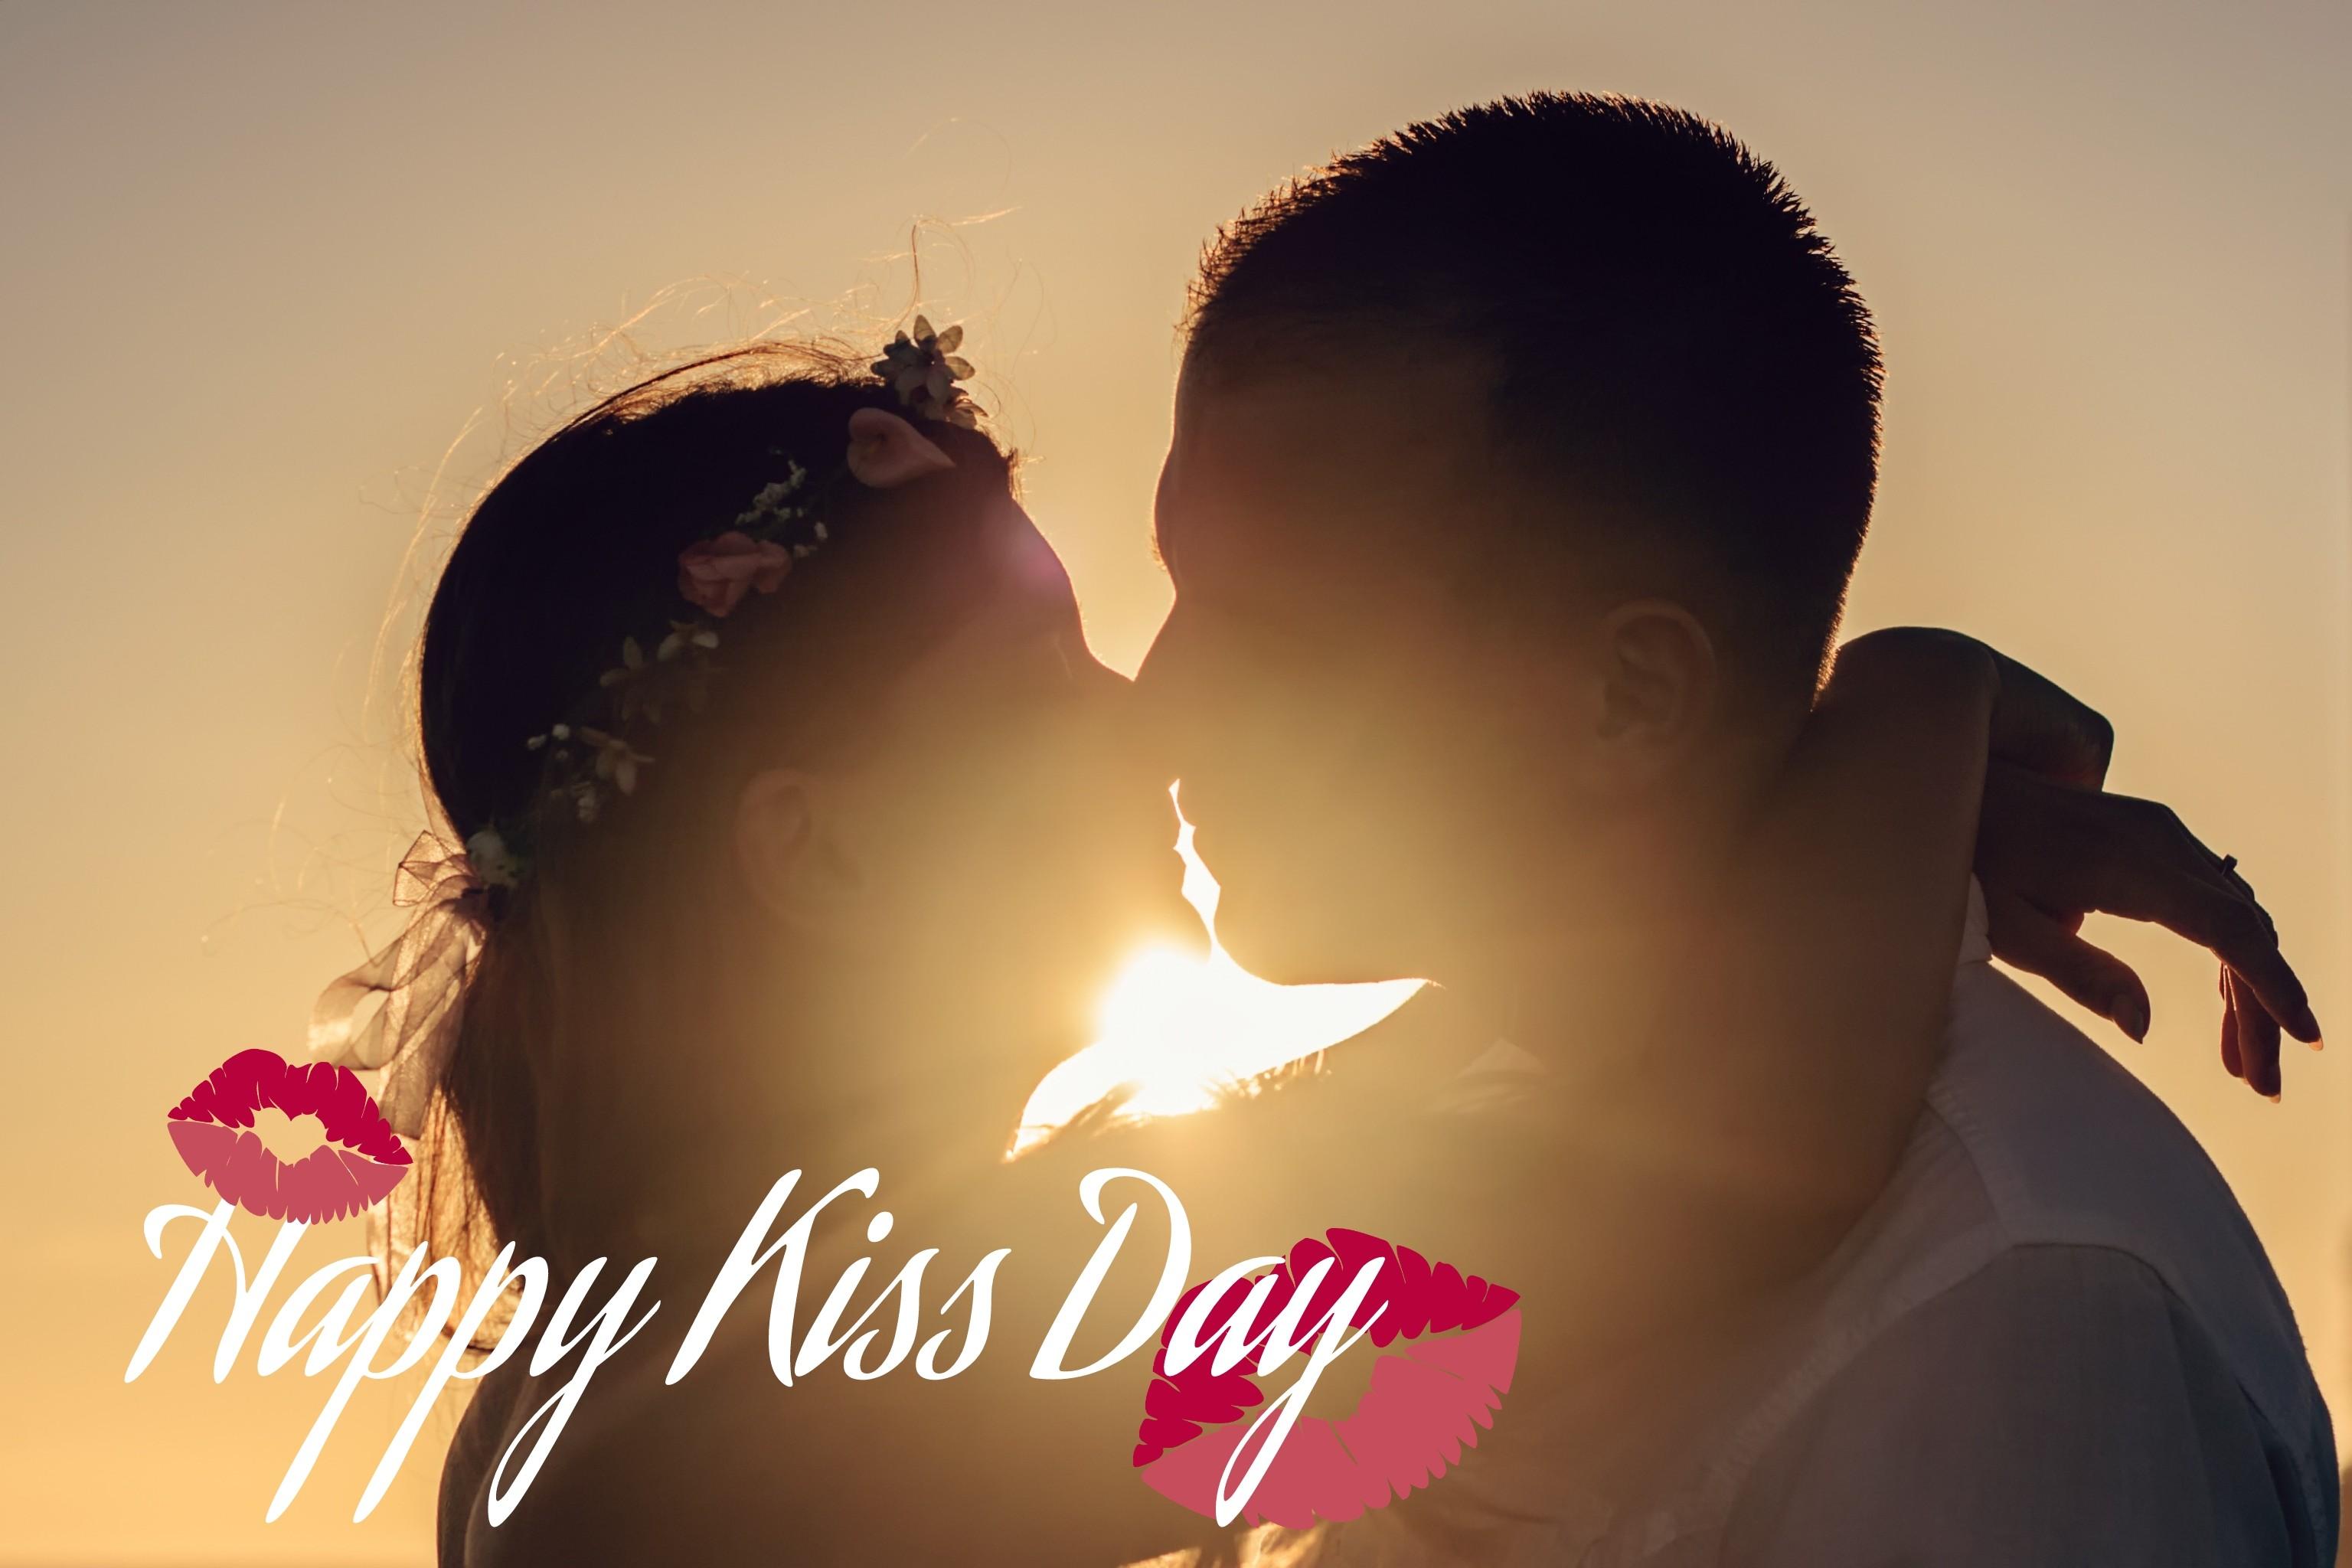 Kiss Day 2018 HD 4k Image And Wallpaper Day HD Image 2018